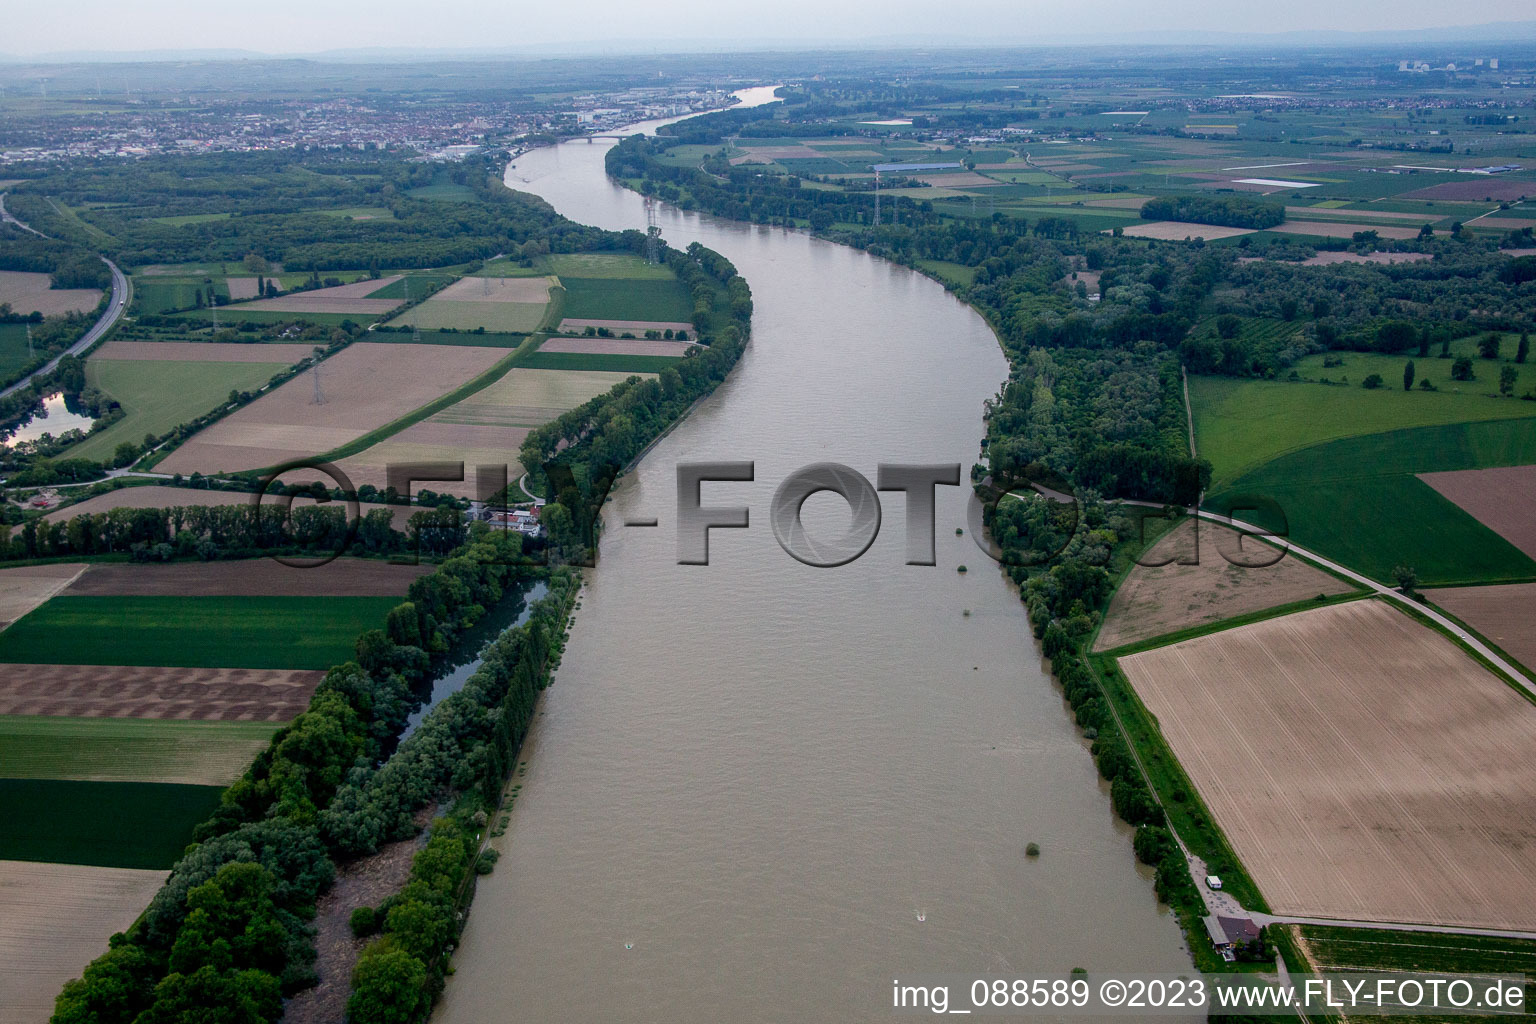 Bird's eye view of Petersau in the state Rhineland-Palatinate, Germany